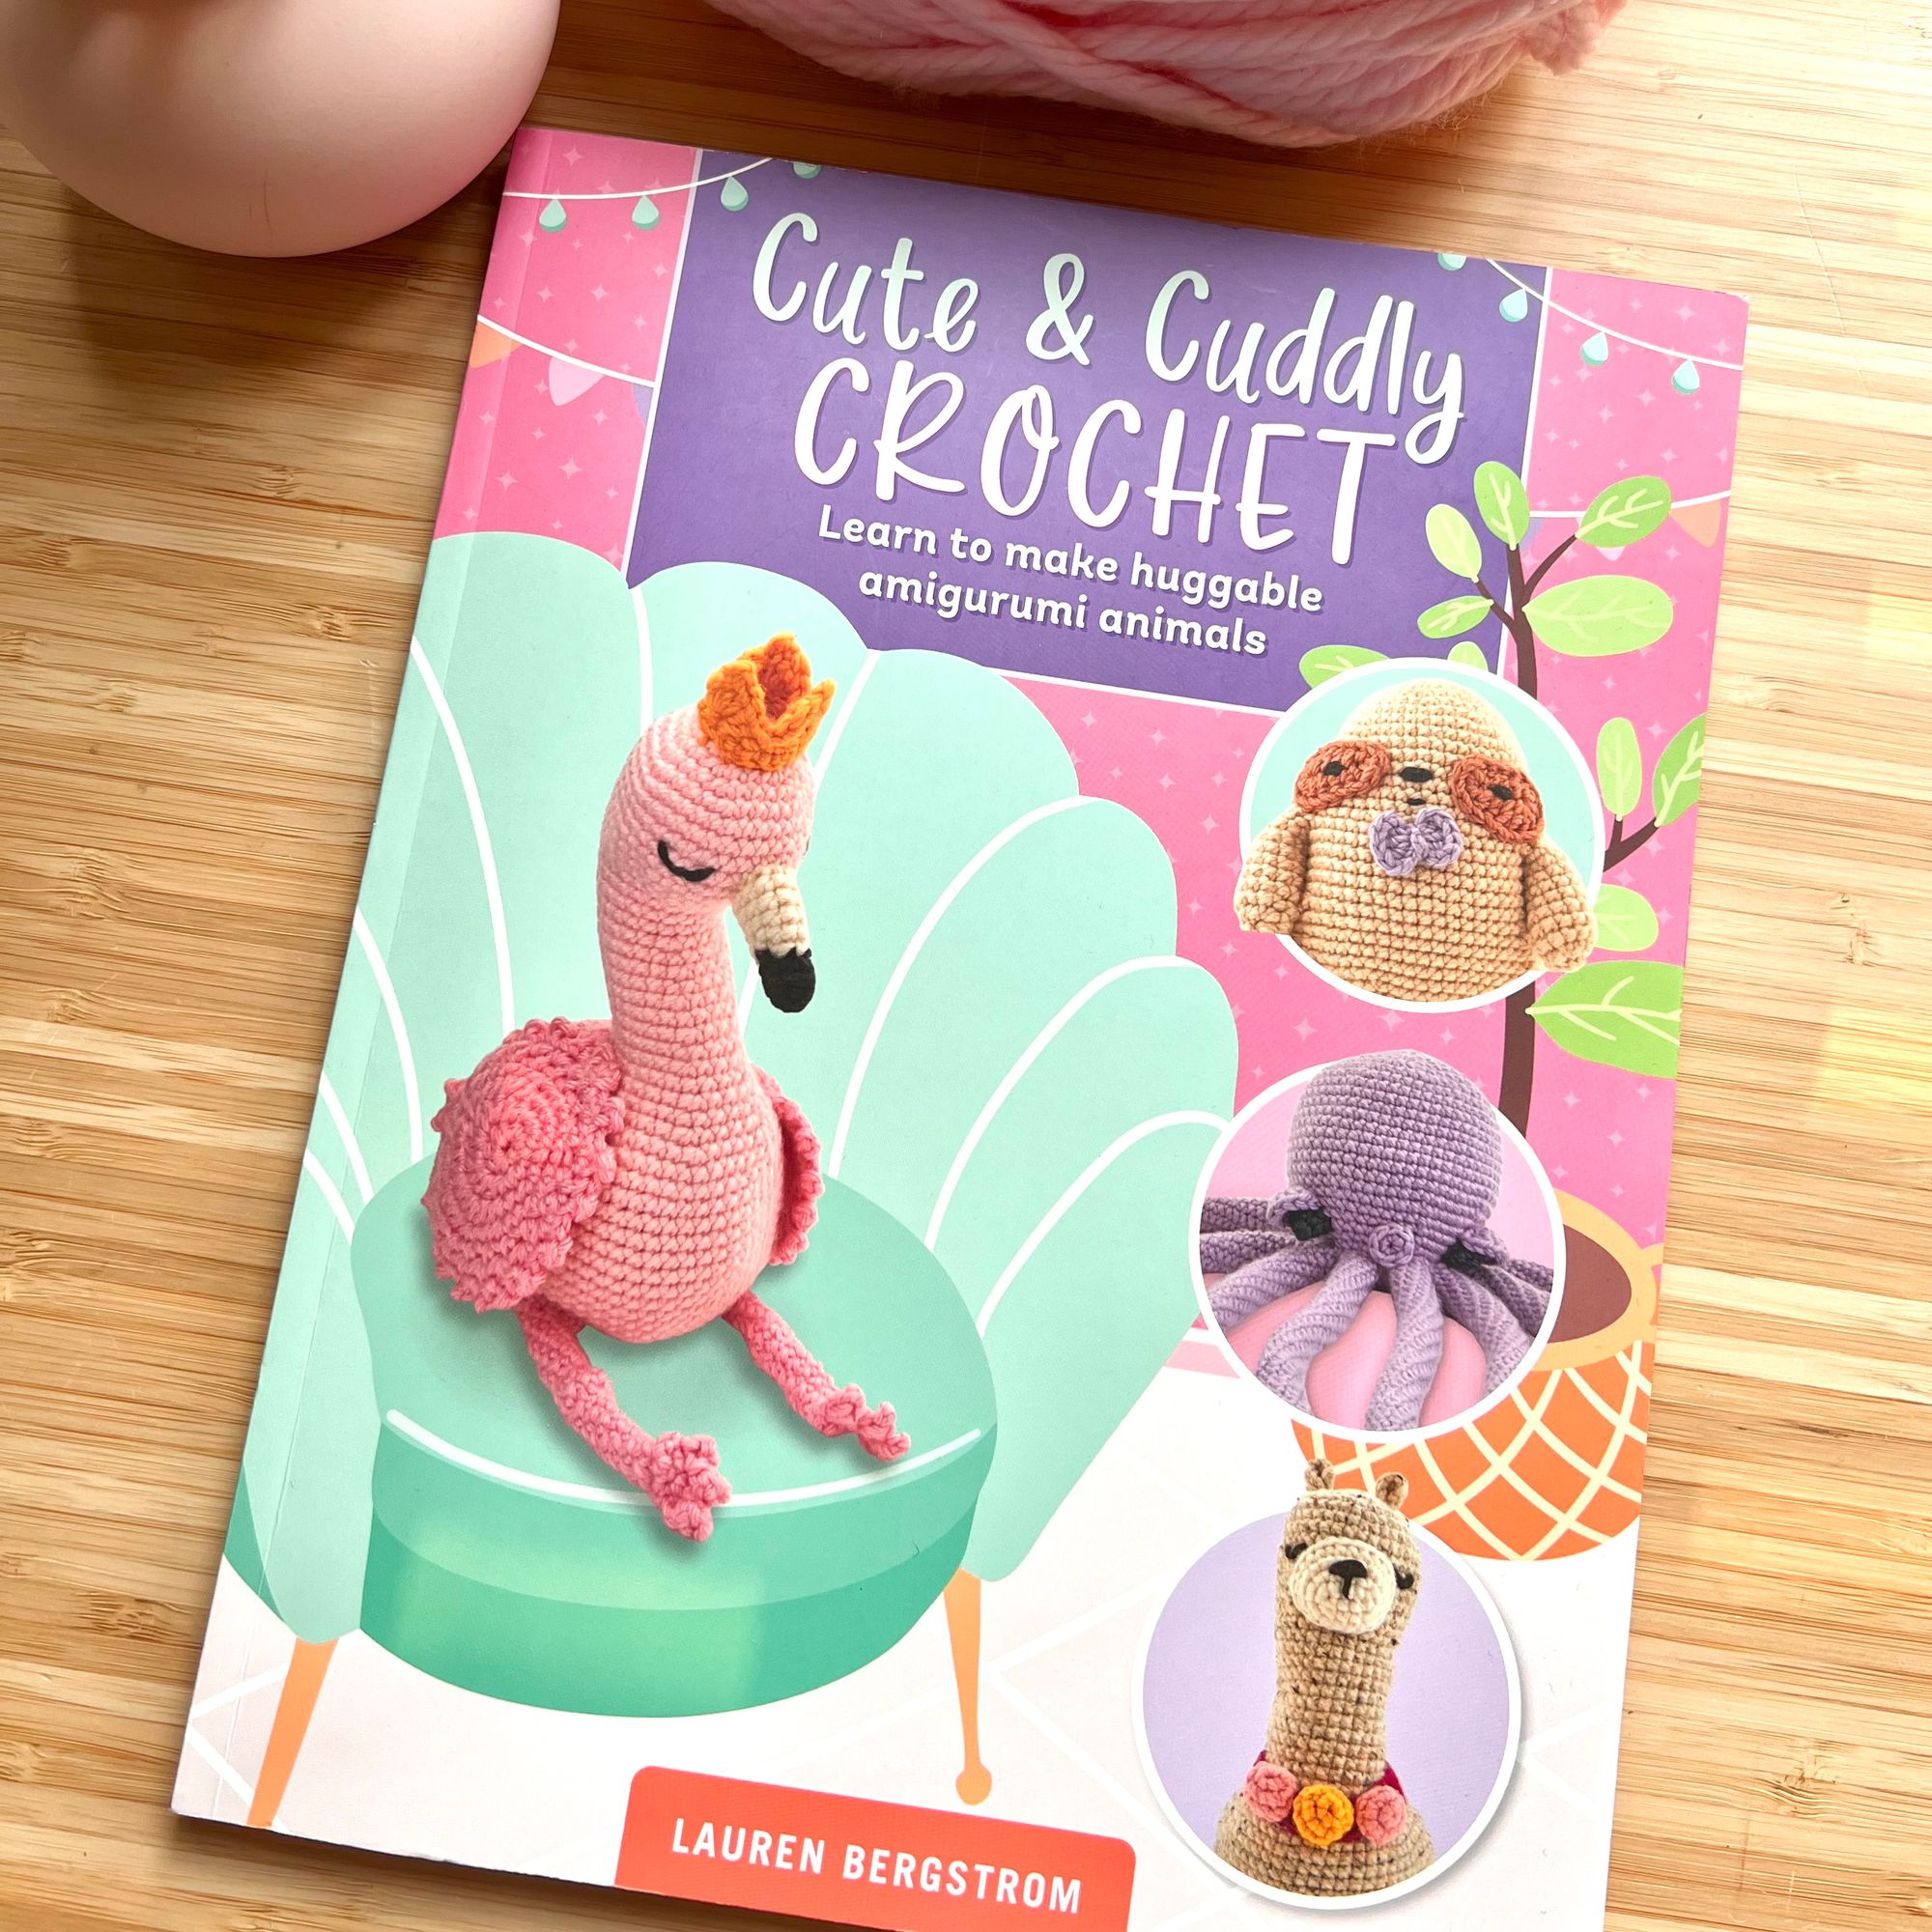 One week left for the Cute & Cuddly Crochet pre-order bonus!